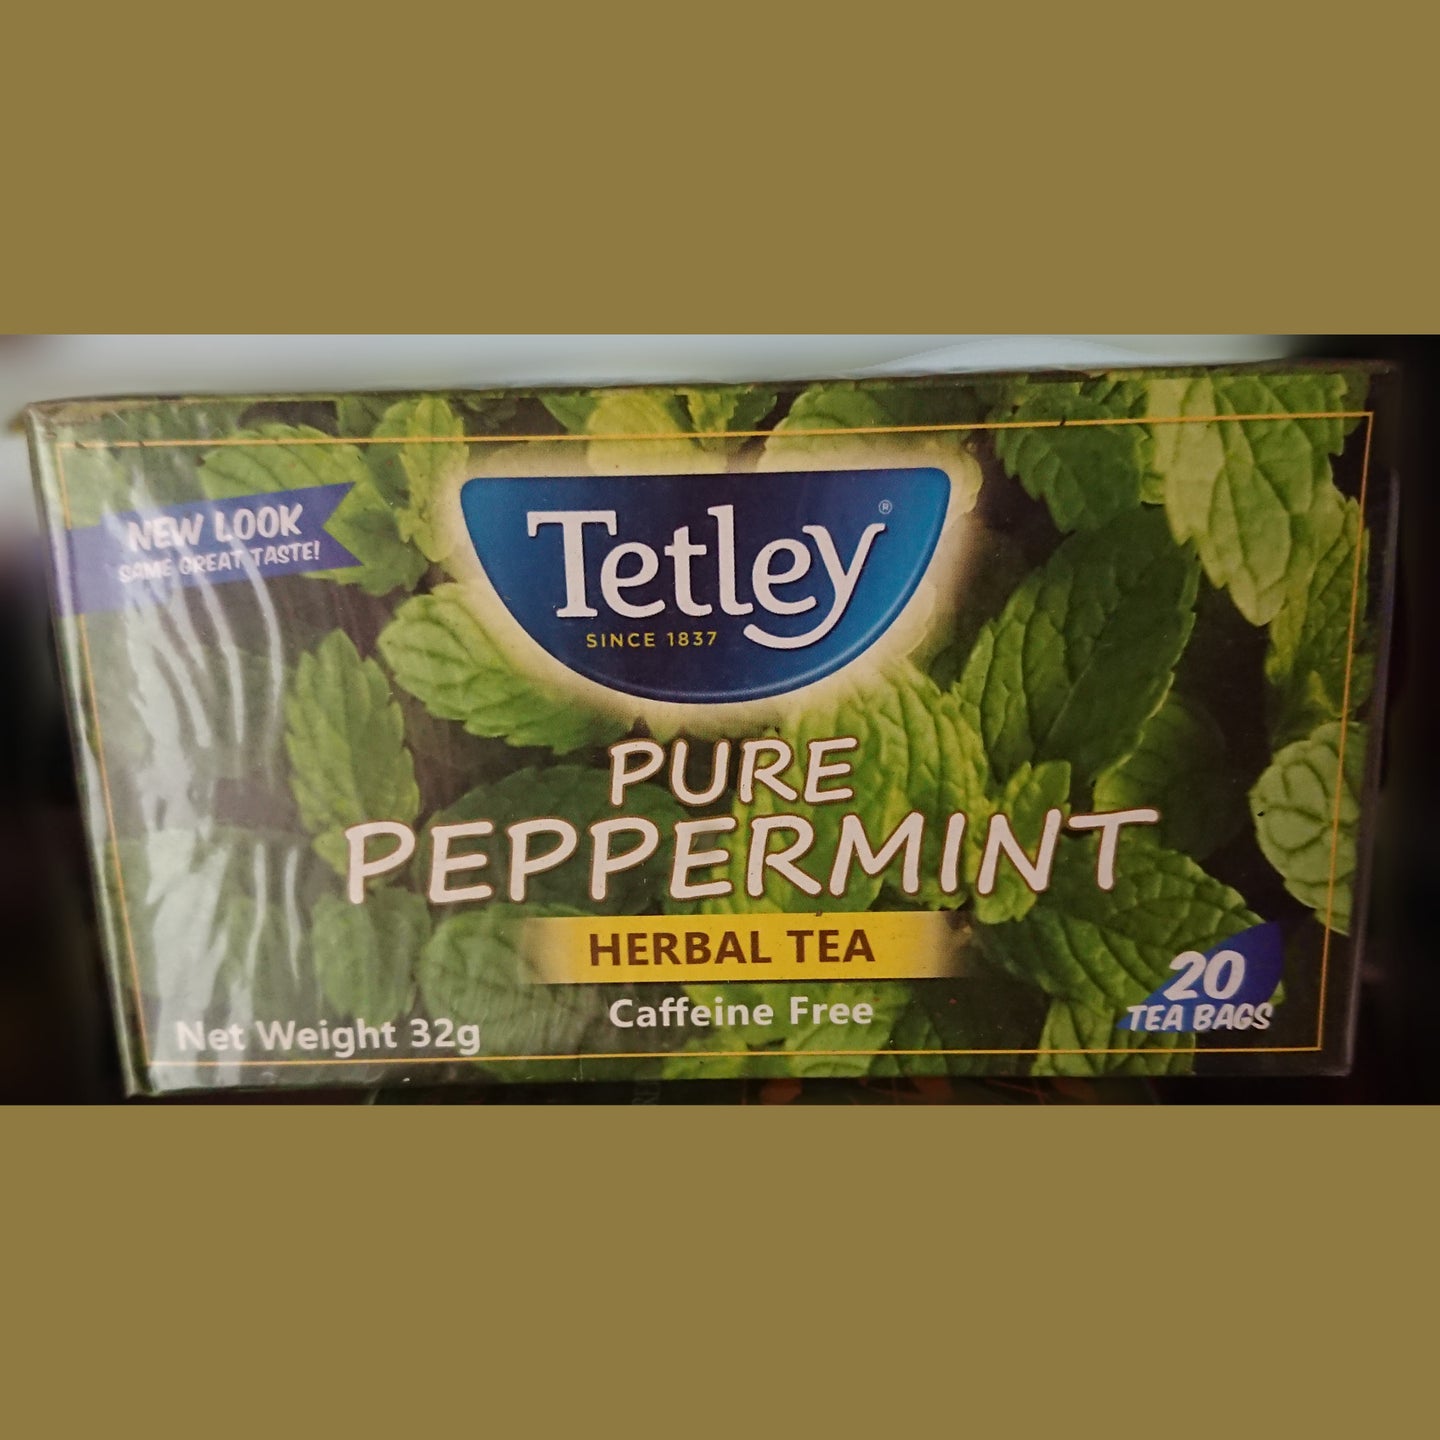 Tetley Pure Peppermint Herbal Tea (32g)